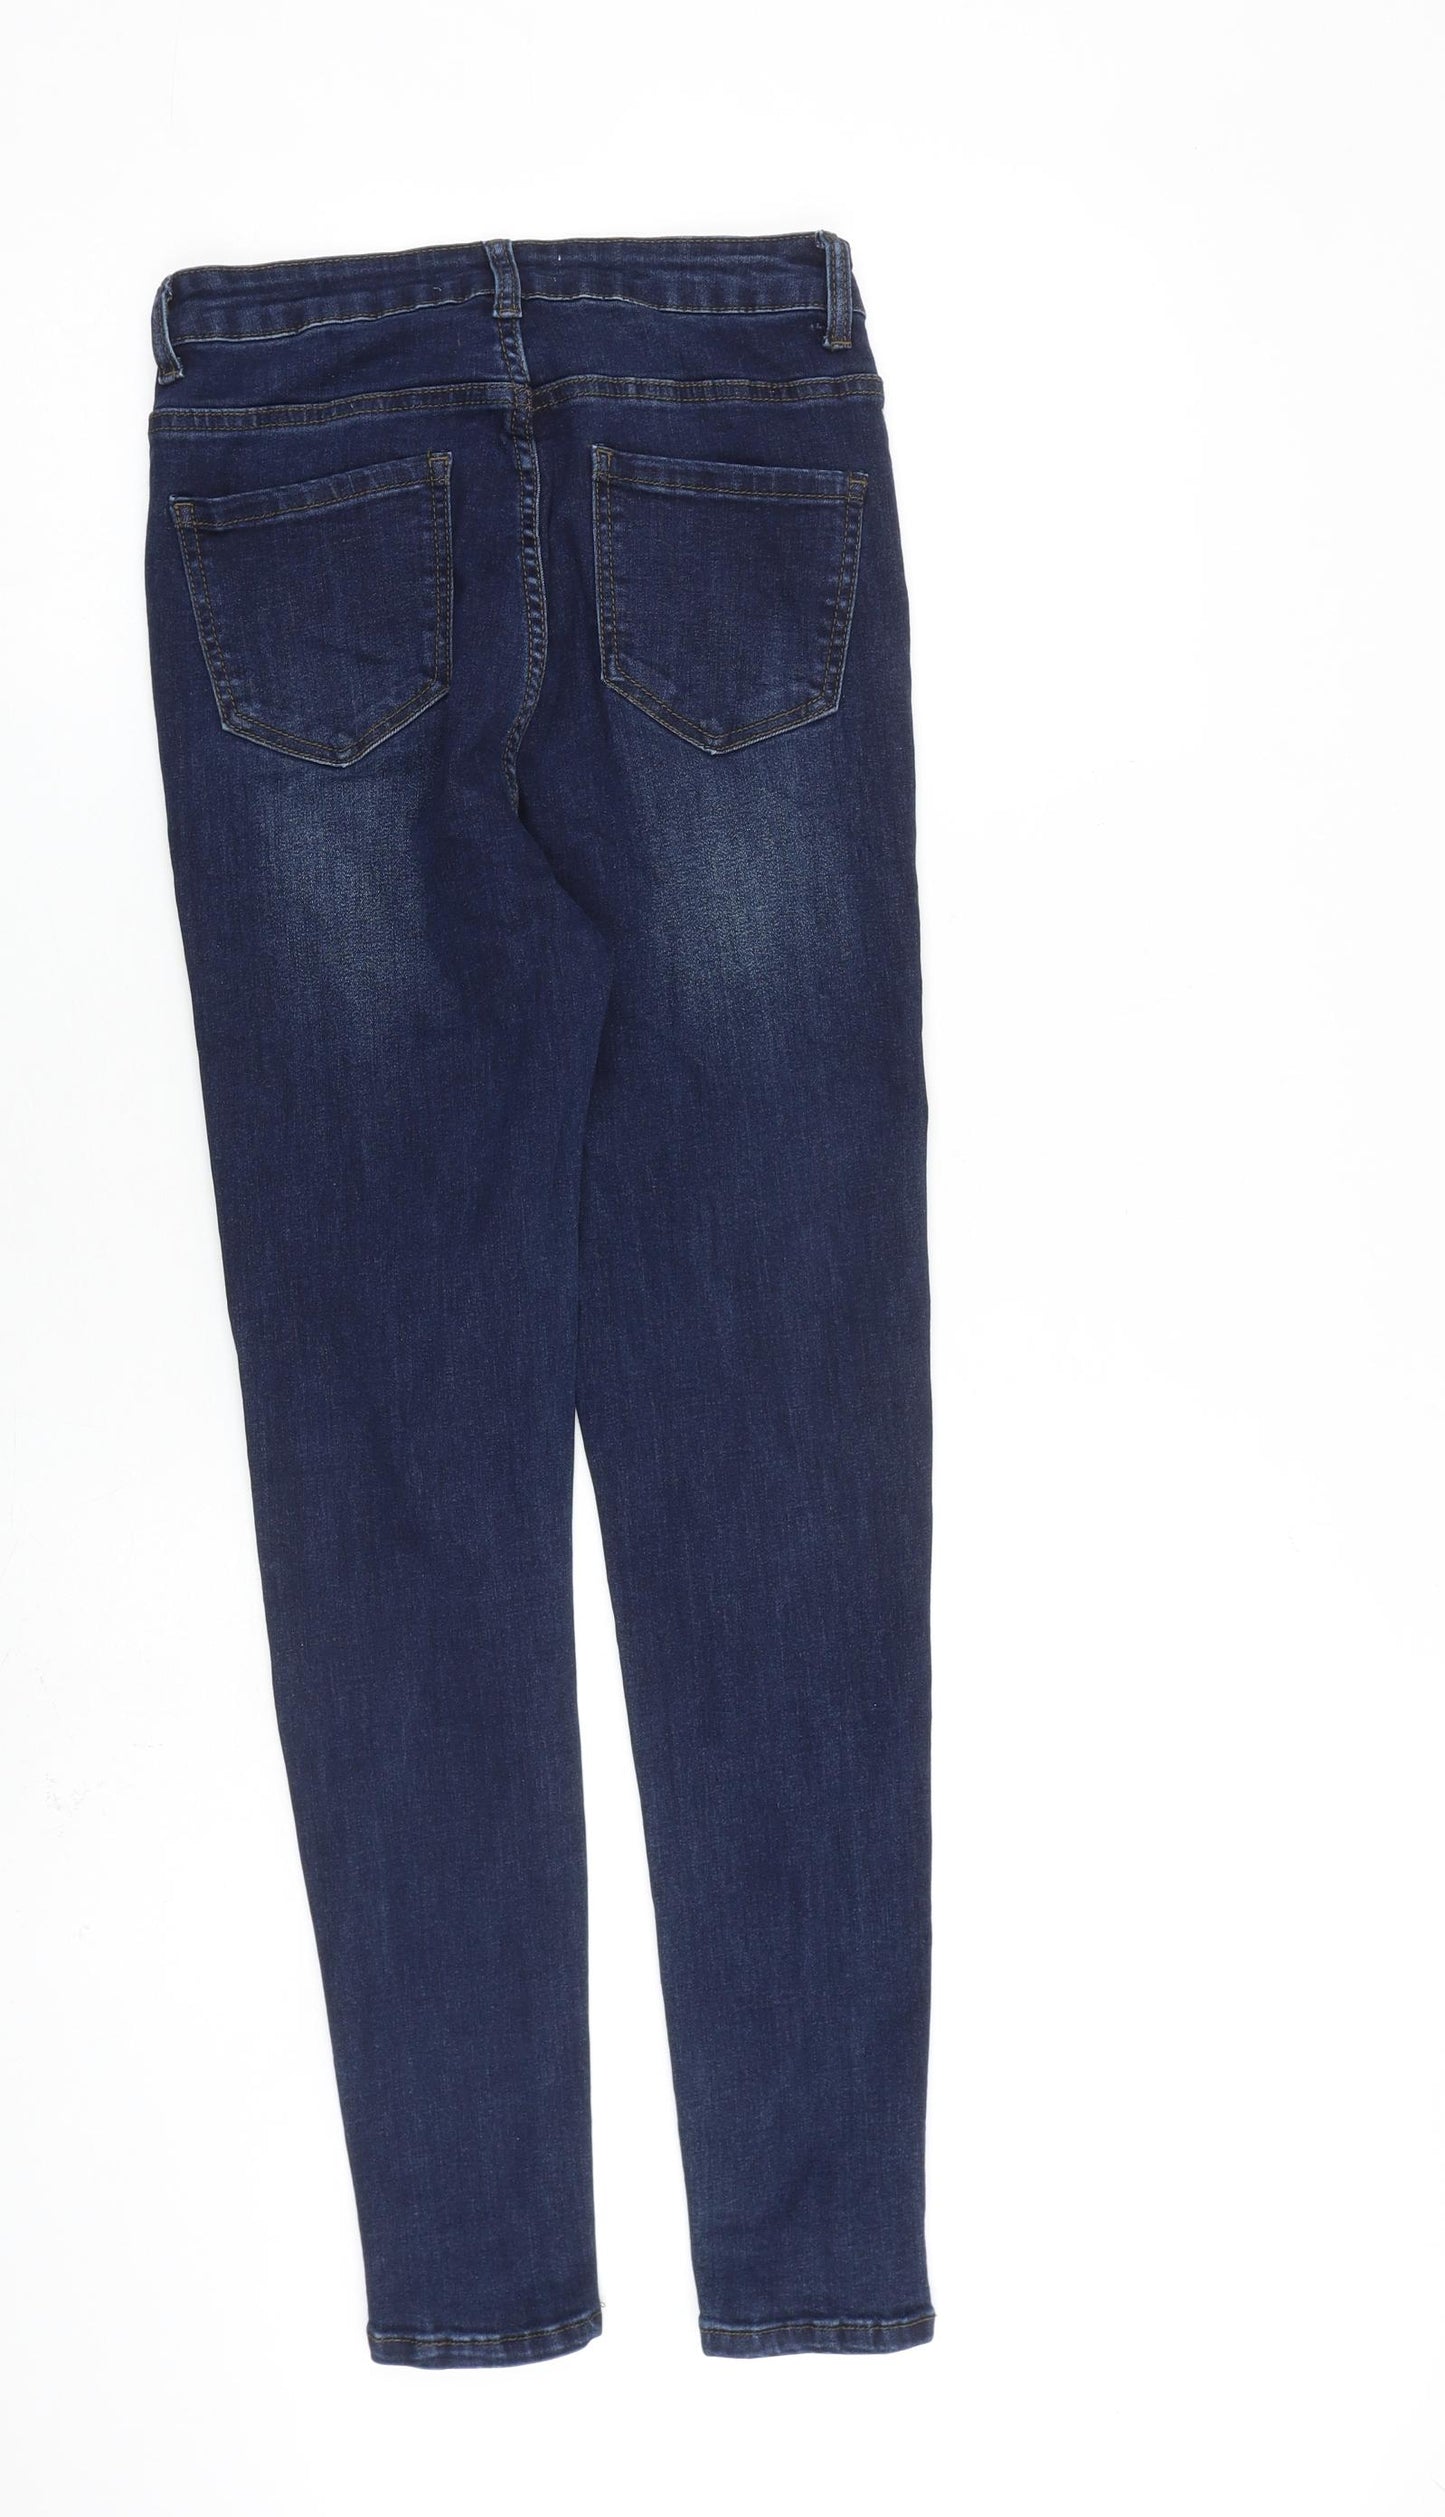 Nina Carter Womens Blue Cotton Skinny Jeans Size 8 L28 in Slim Zip